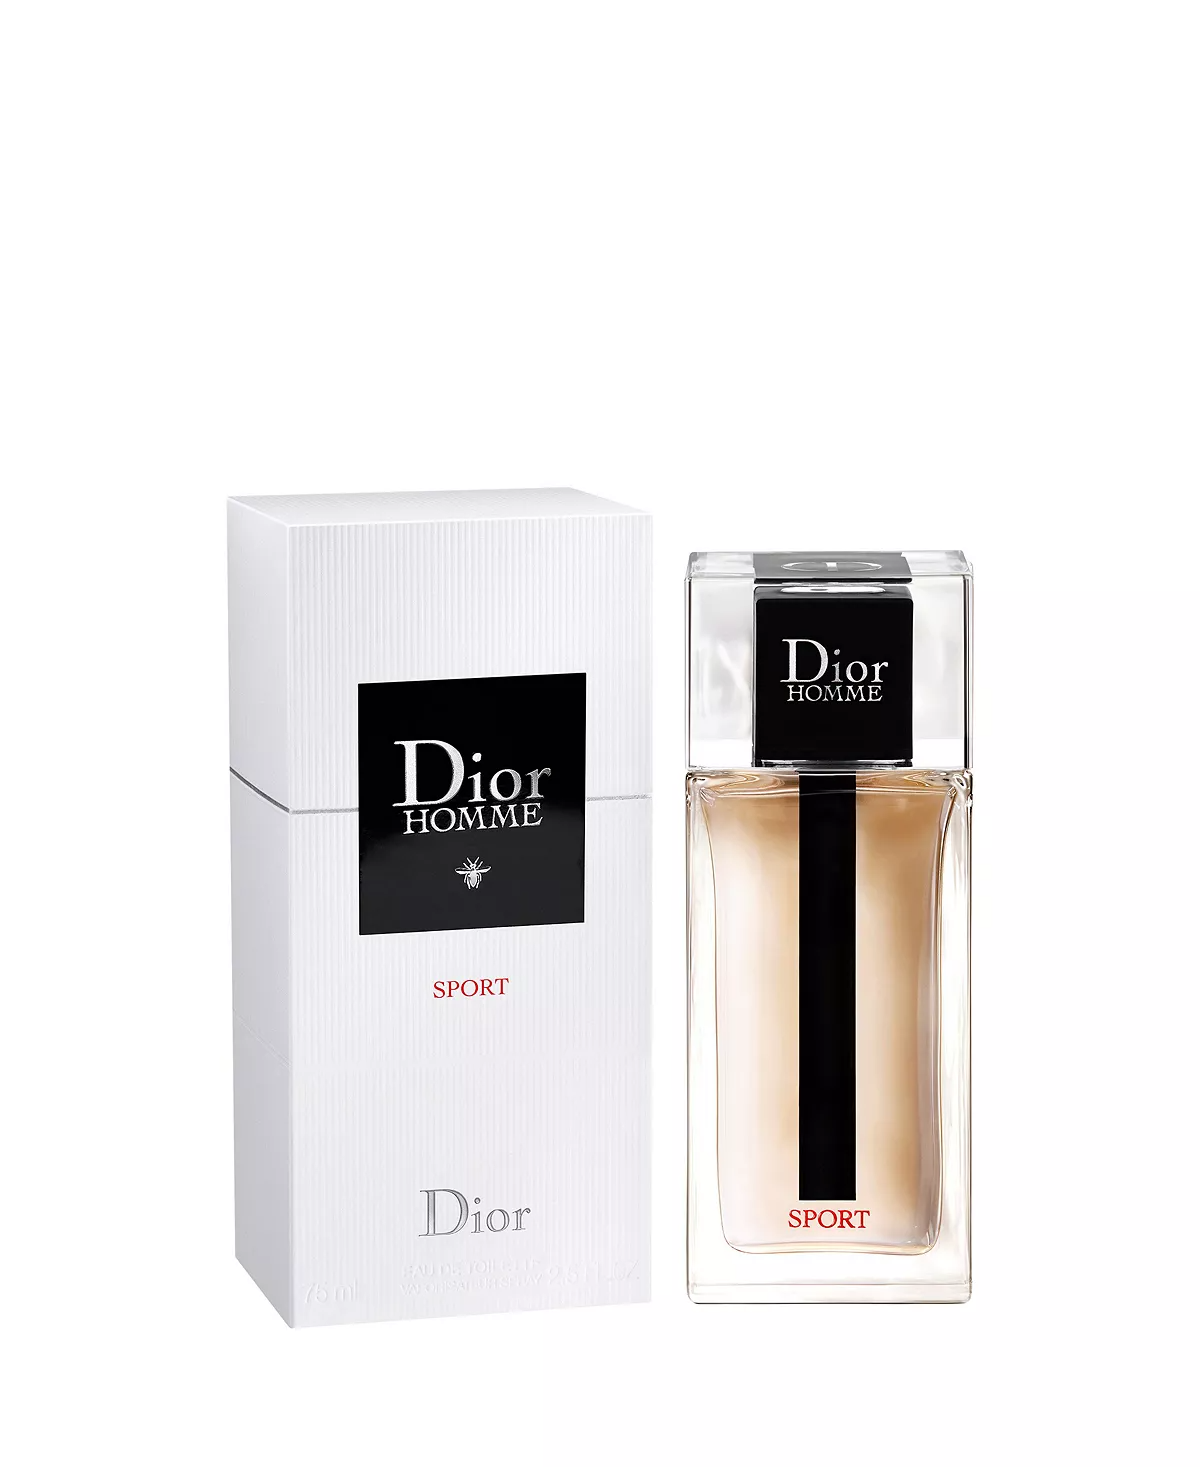 Dior Homme Sport By Christian Dior 2.5 oz For Men EDT Spray